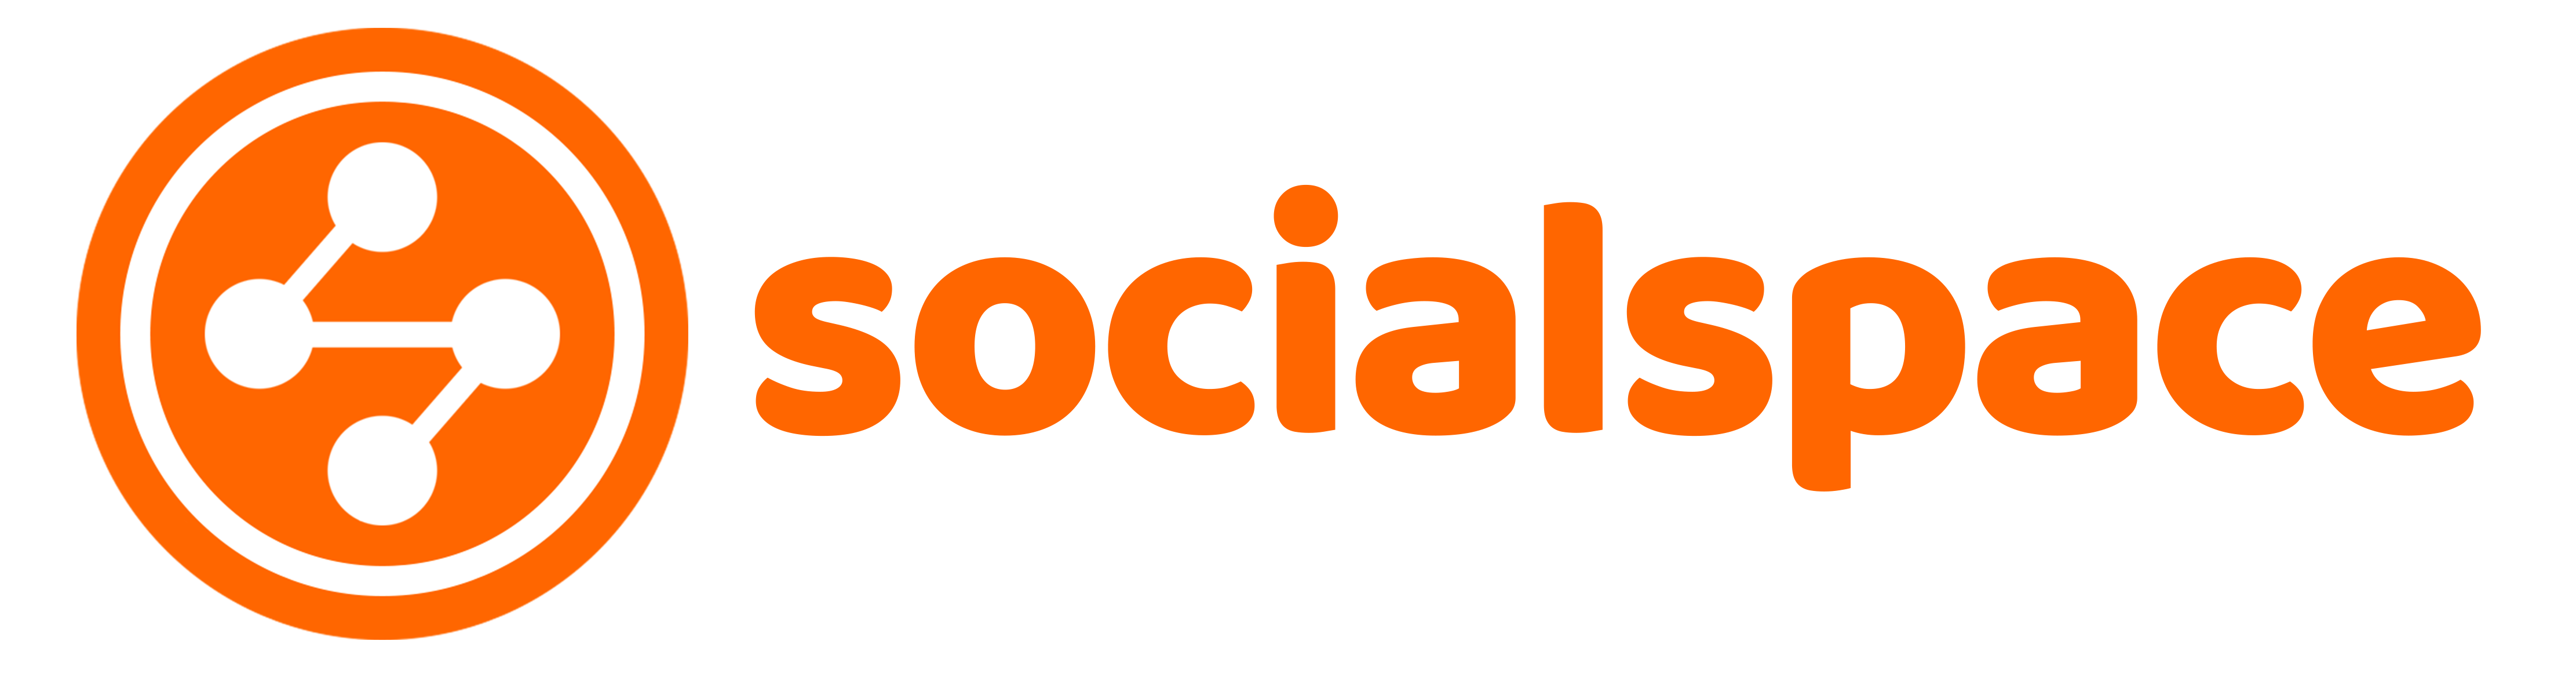 Socialspace